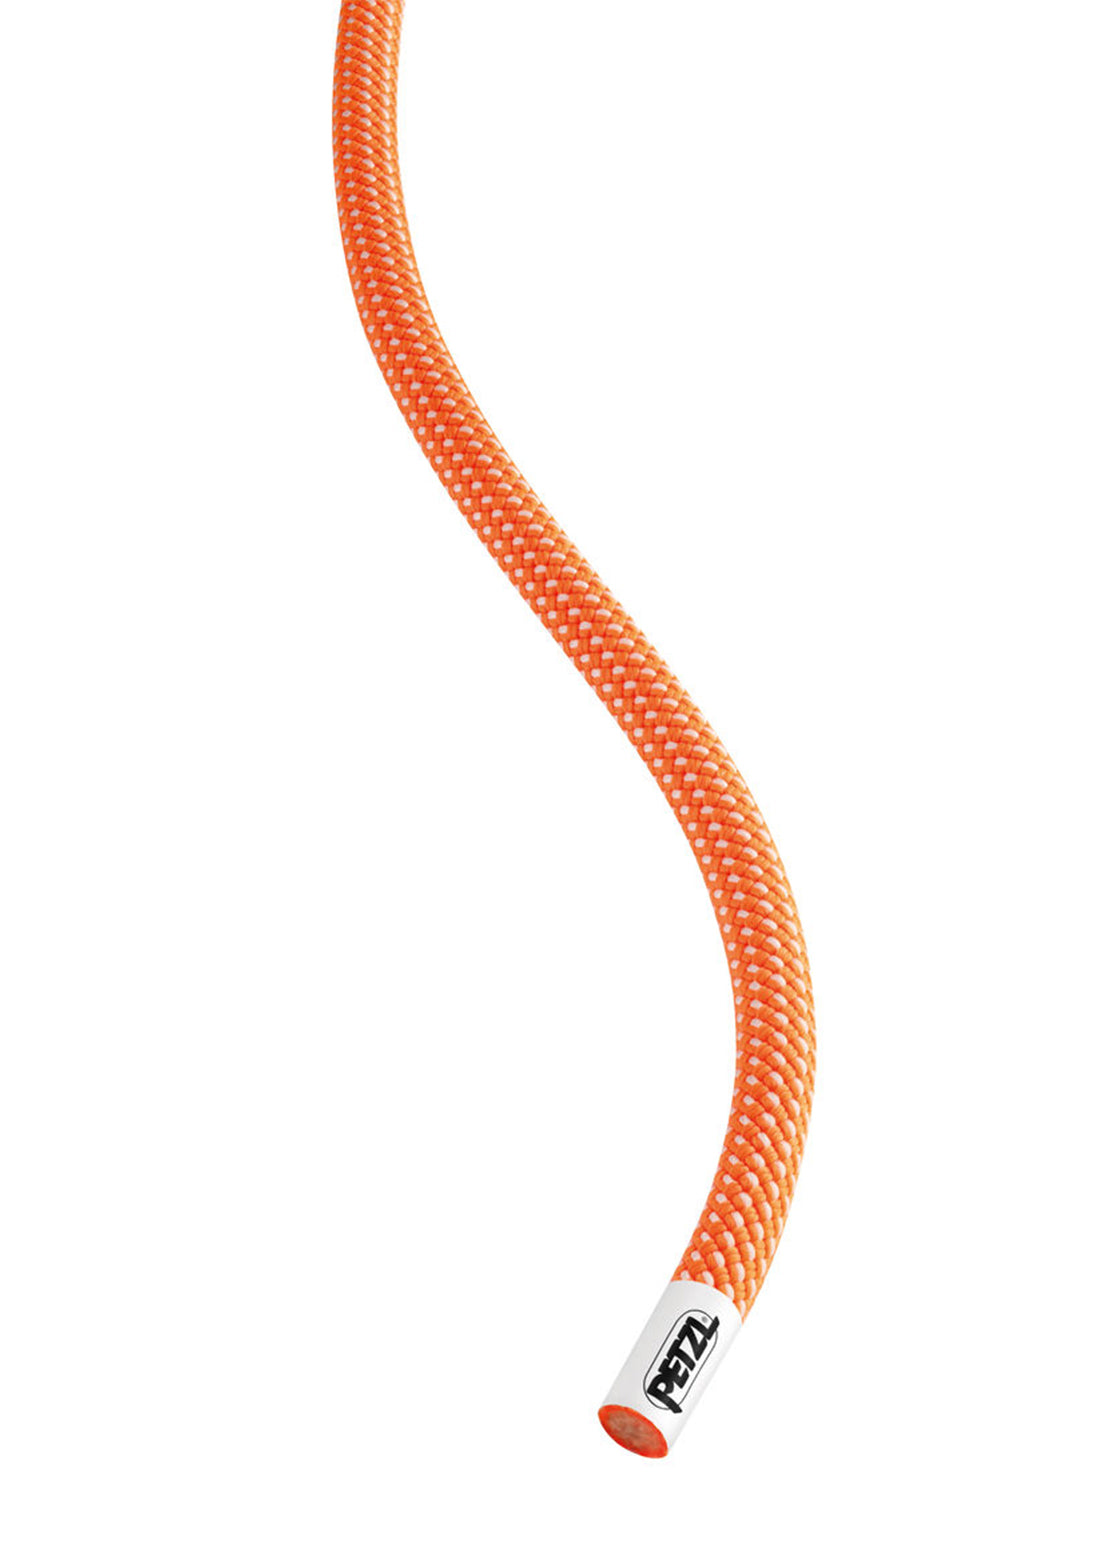 Petzl Volta 9.2mm Dry Climbing Rope - 70m - PRFO Sports